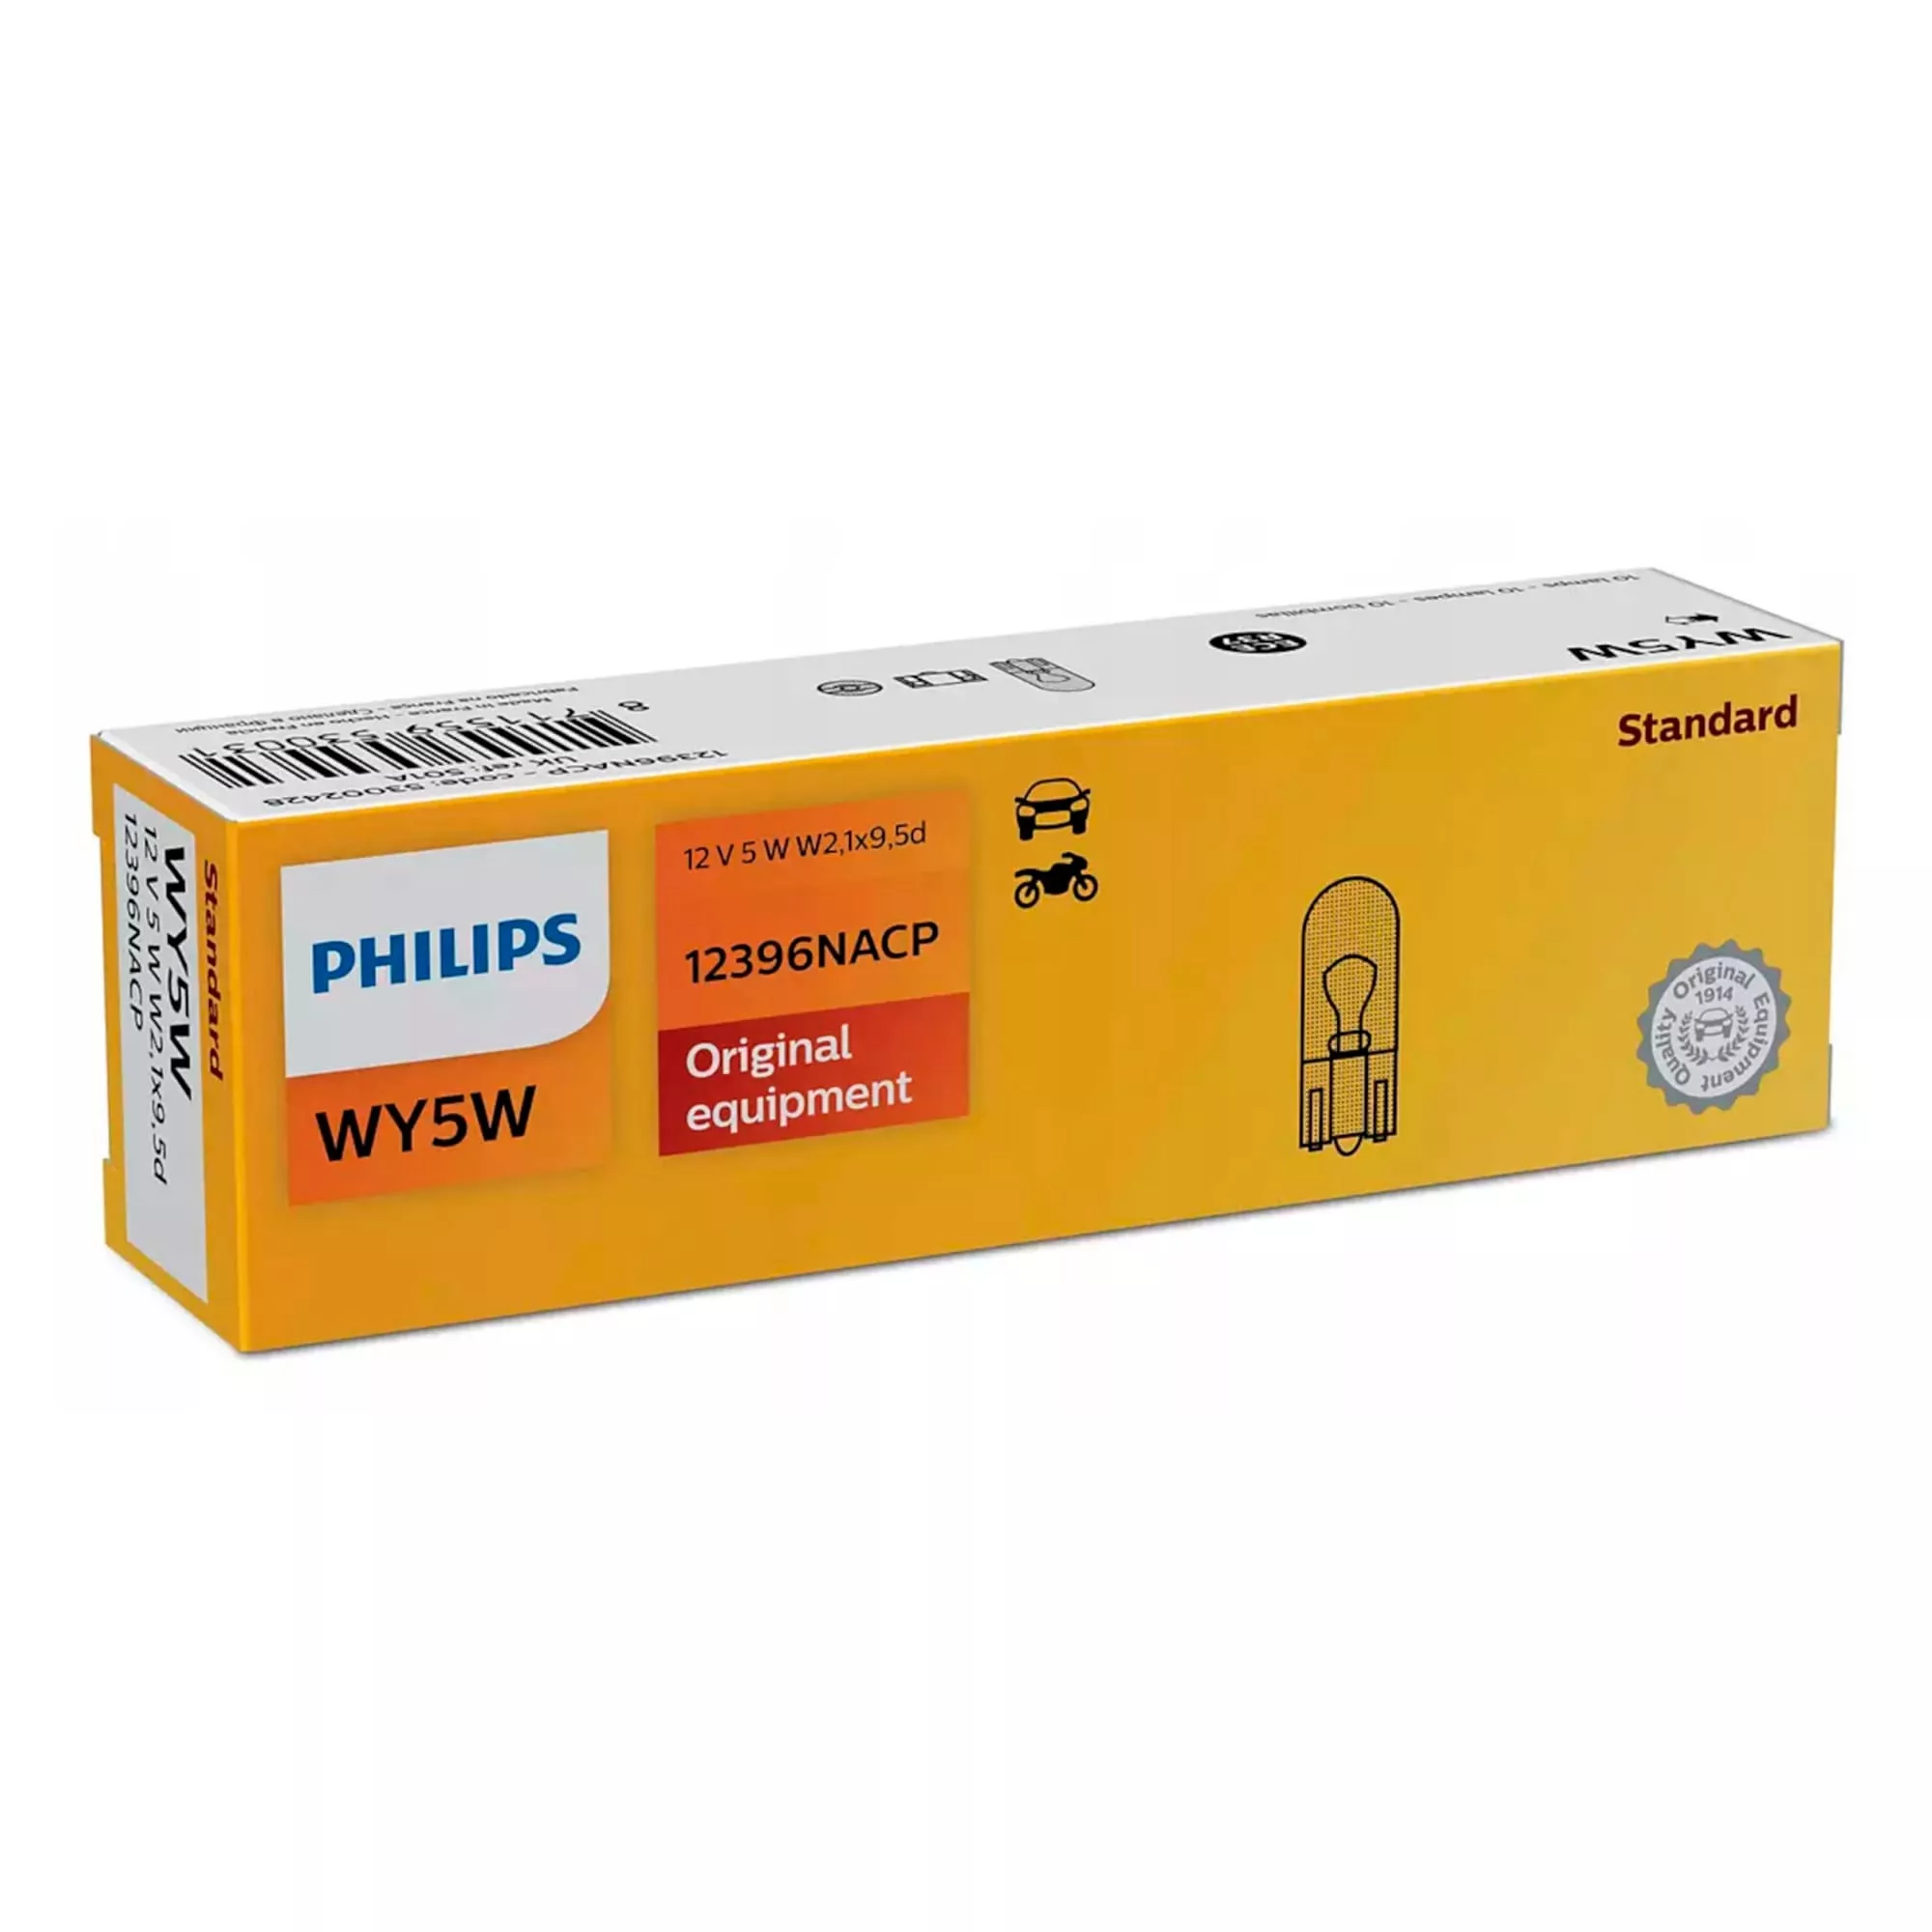 Лампа Philips Original equipment WY5W 12V 5W 53002428